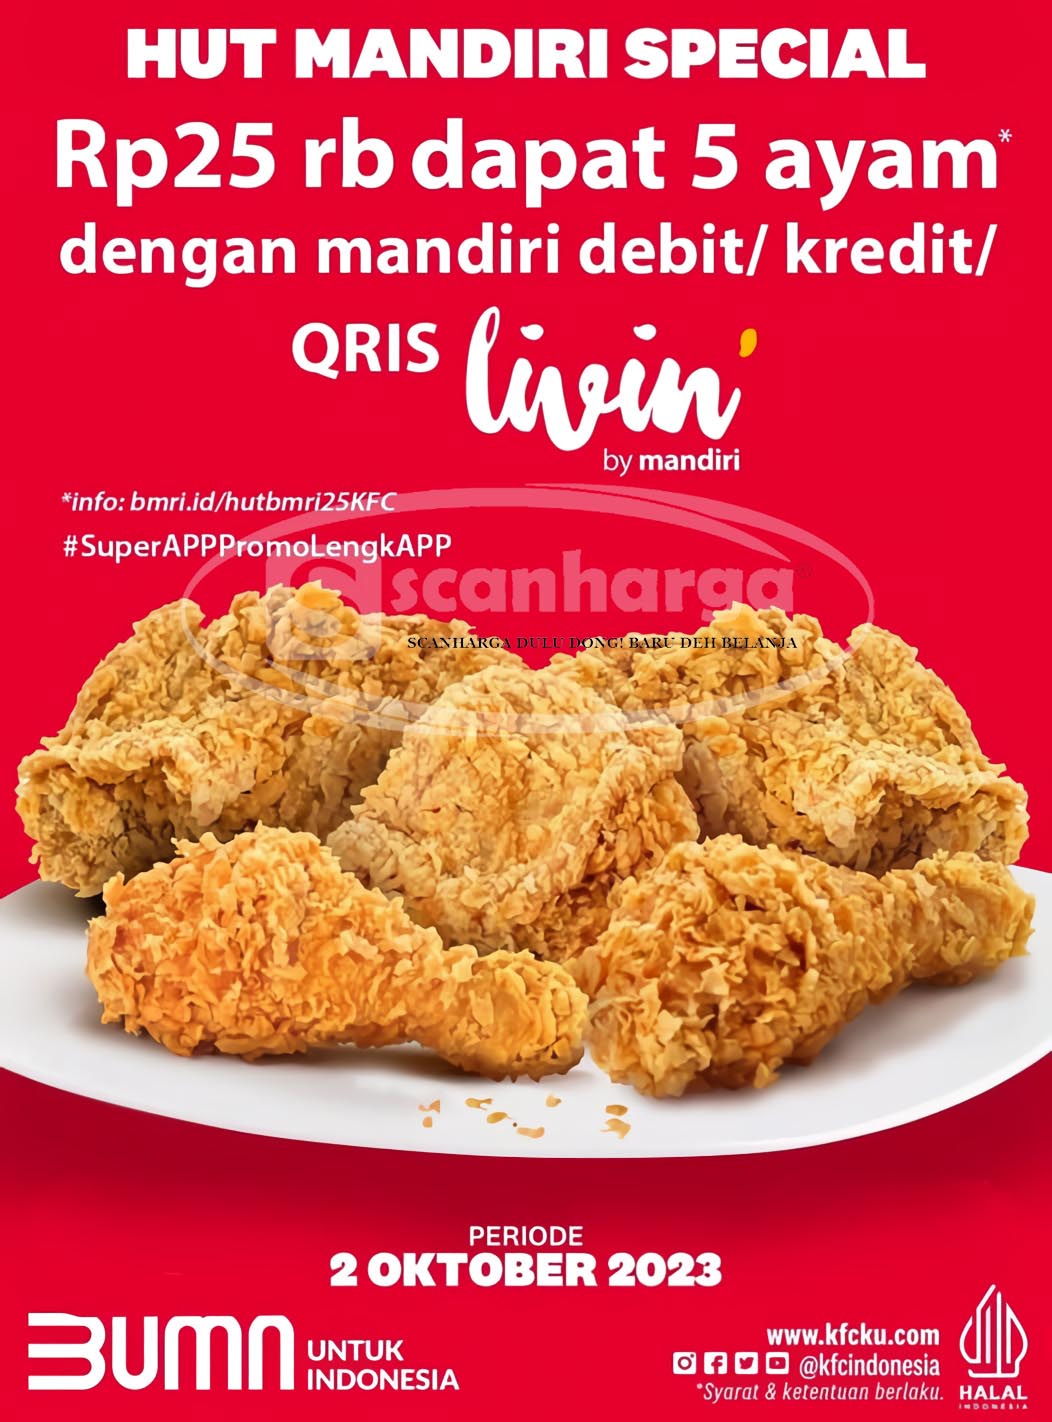 Promo KFC HUT Mandiri Spesial – Bayar Rp 25Ribu Dapat 5 Ayam*